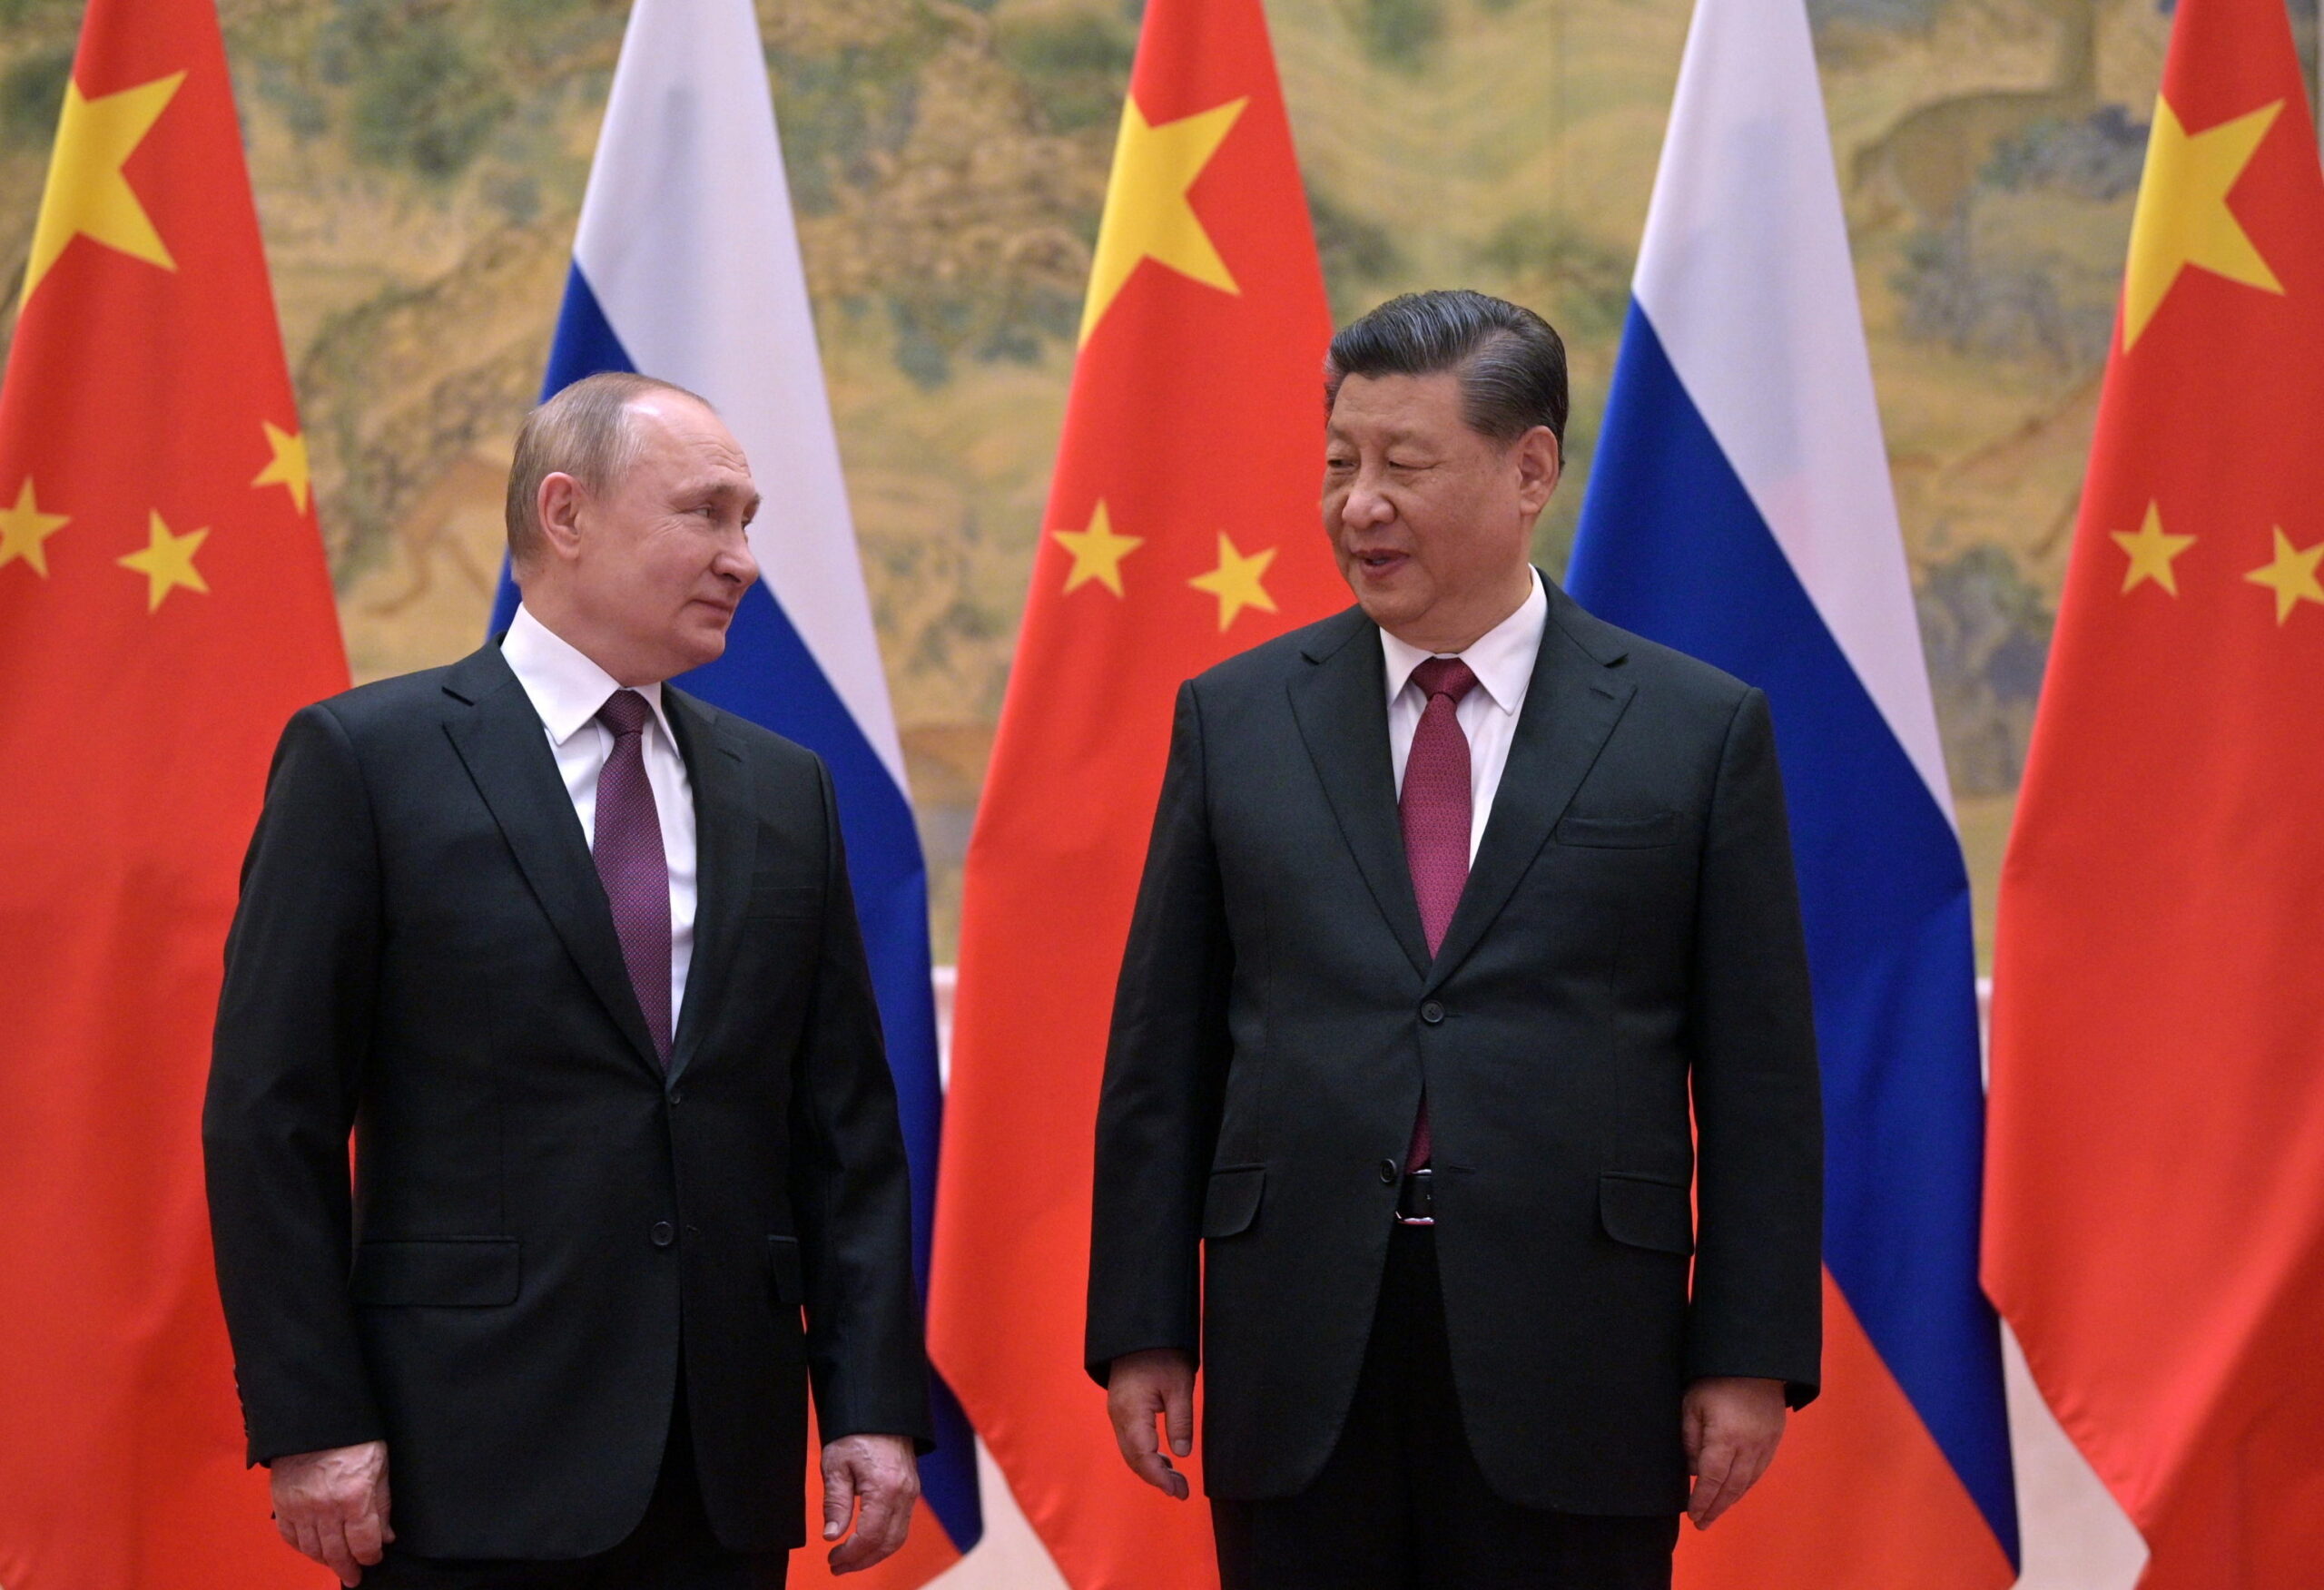 Guerra in Ucraina, la Cina “sta valutando” l’invito di Zelensky a Xi Jinping